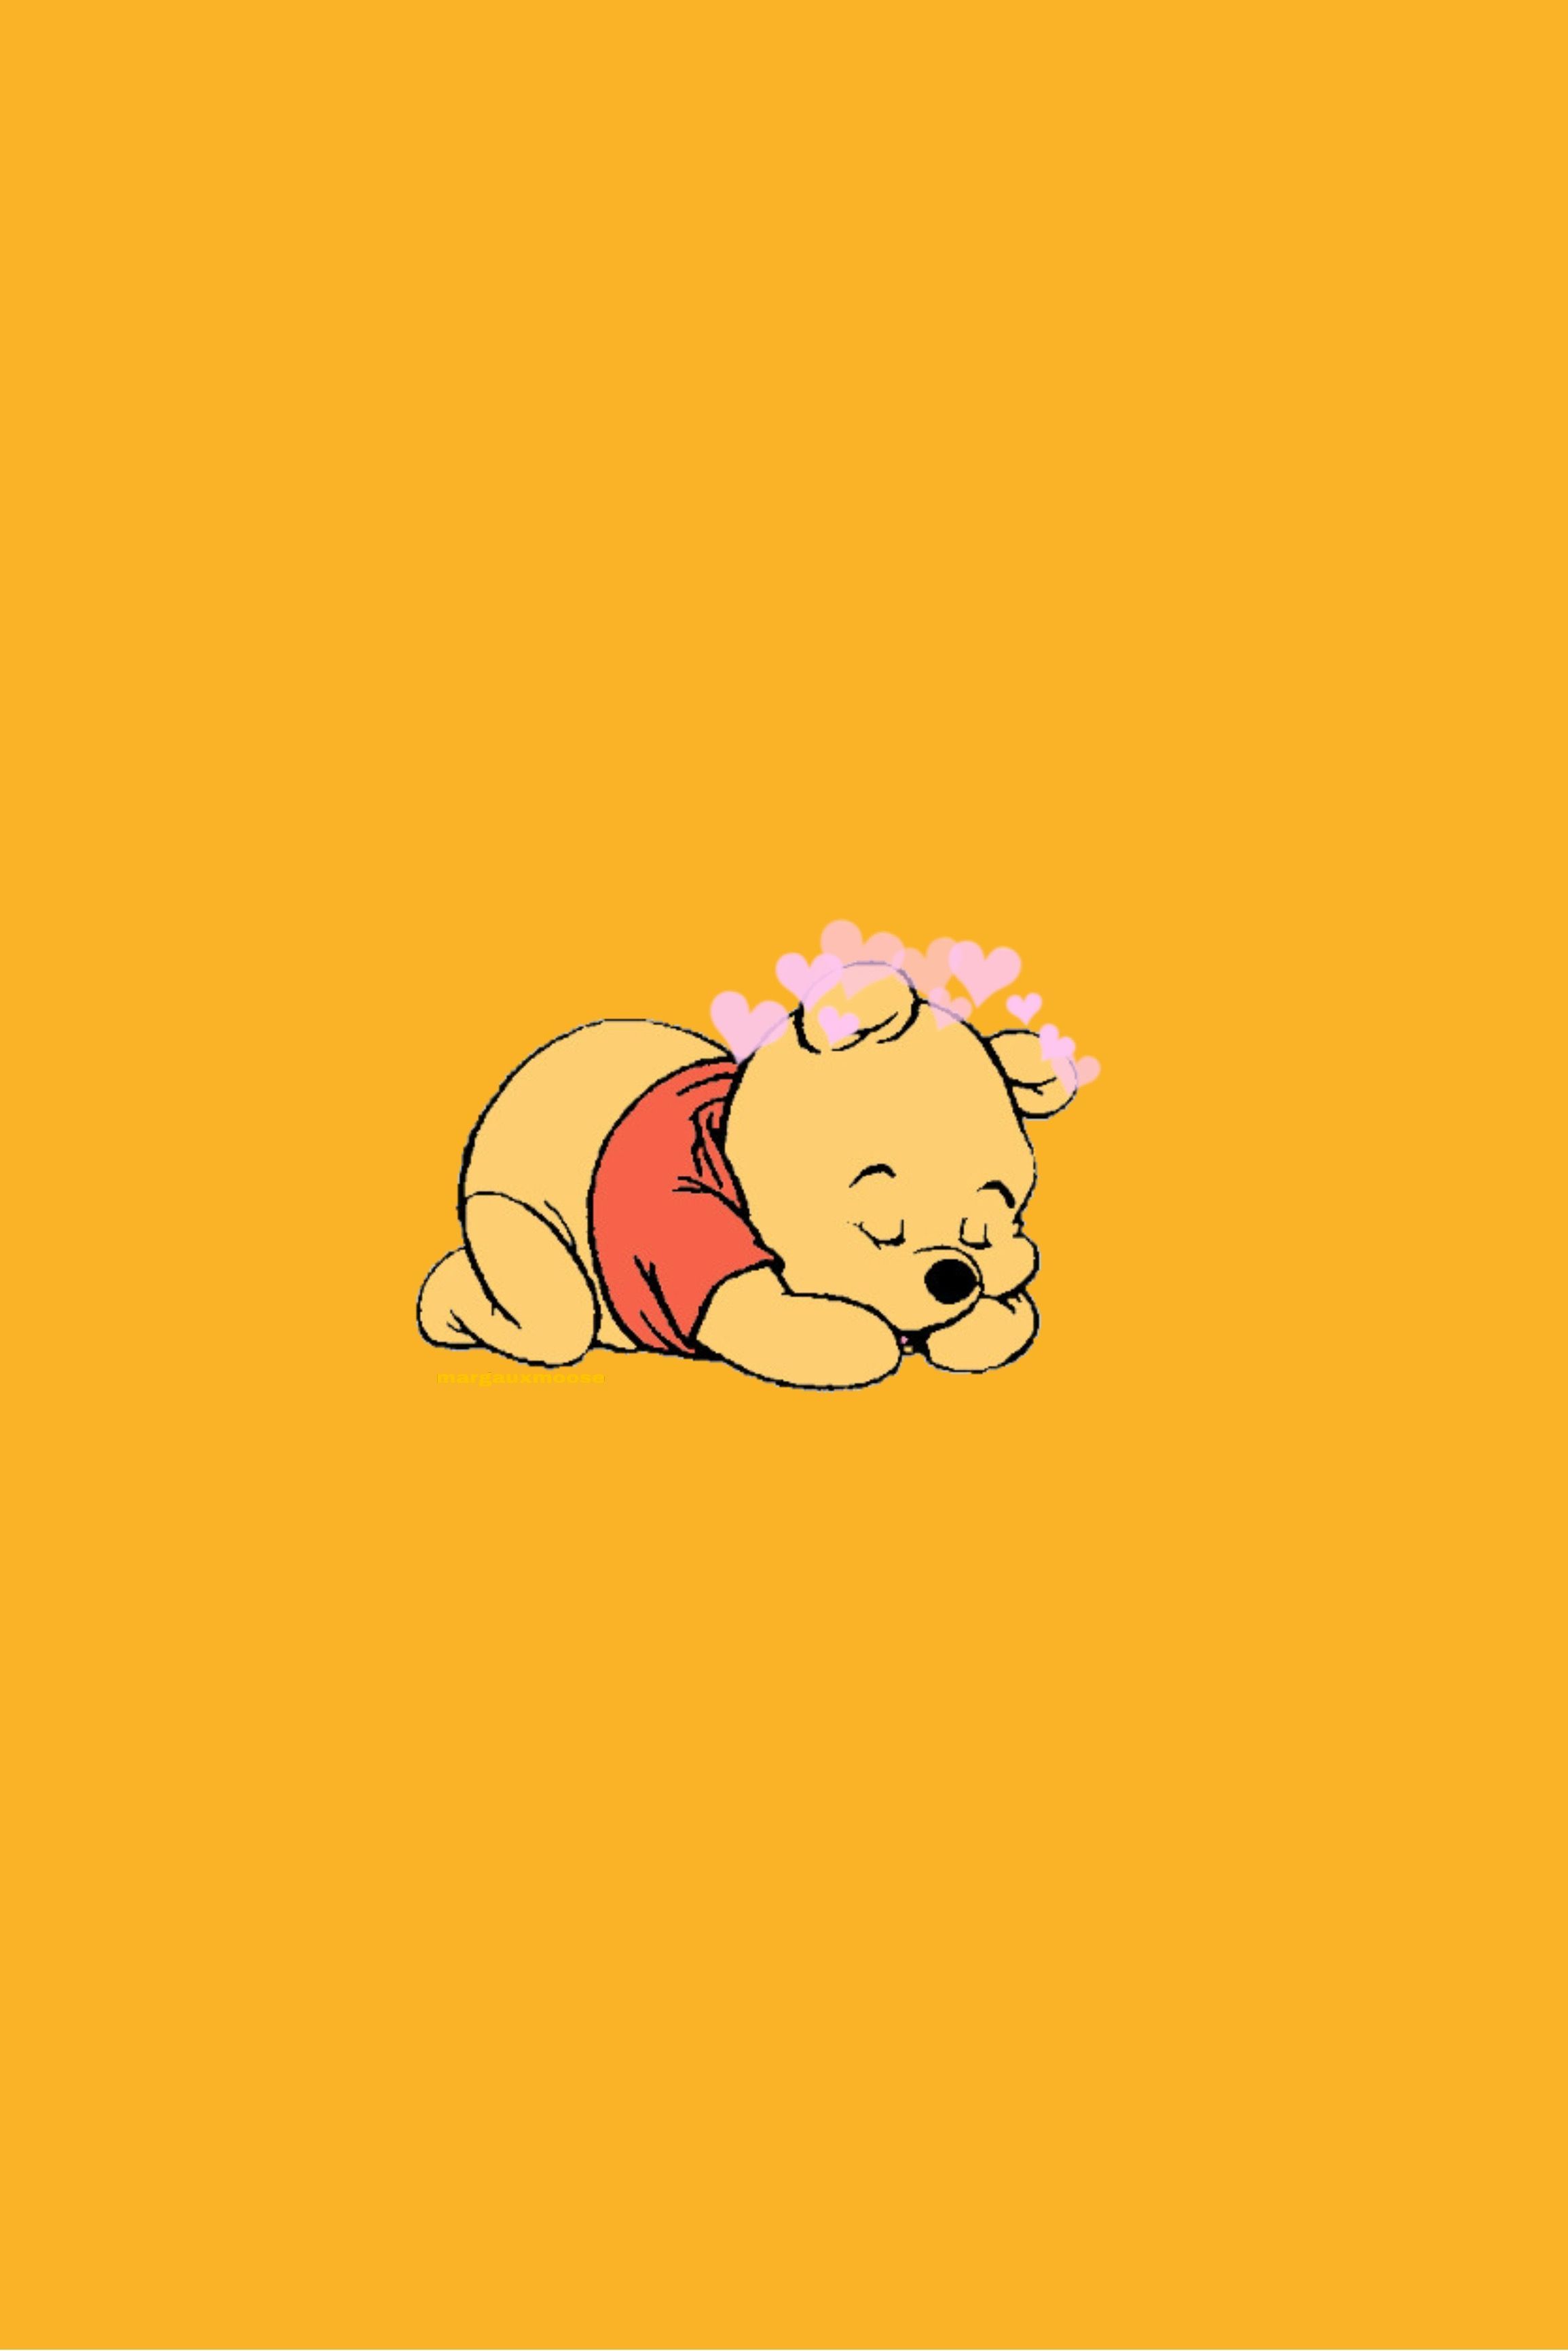 Cute Winnie the Pooh background ❤️. Winnie the pooh background, Cute winnie the pooh, Cartoon wallpaper iphone